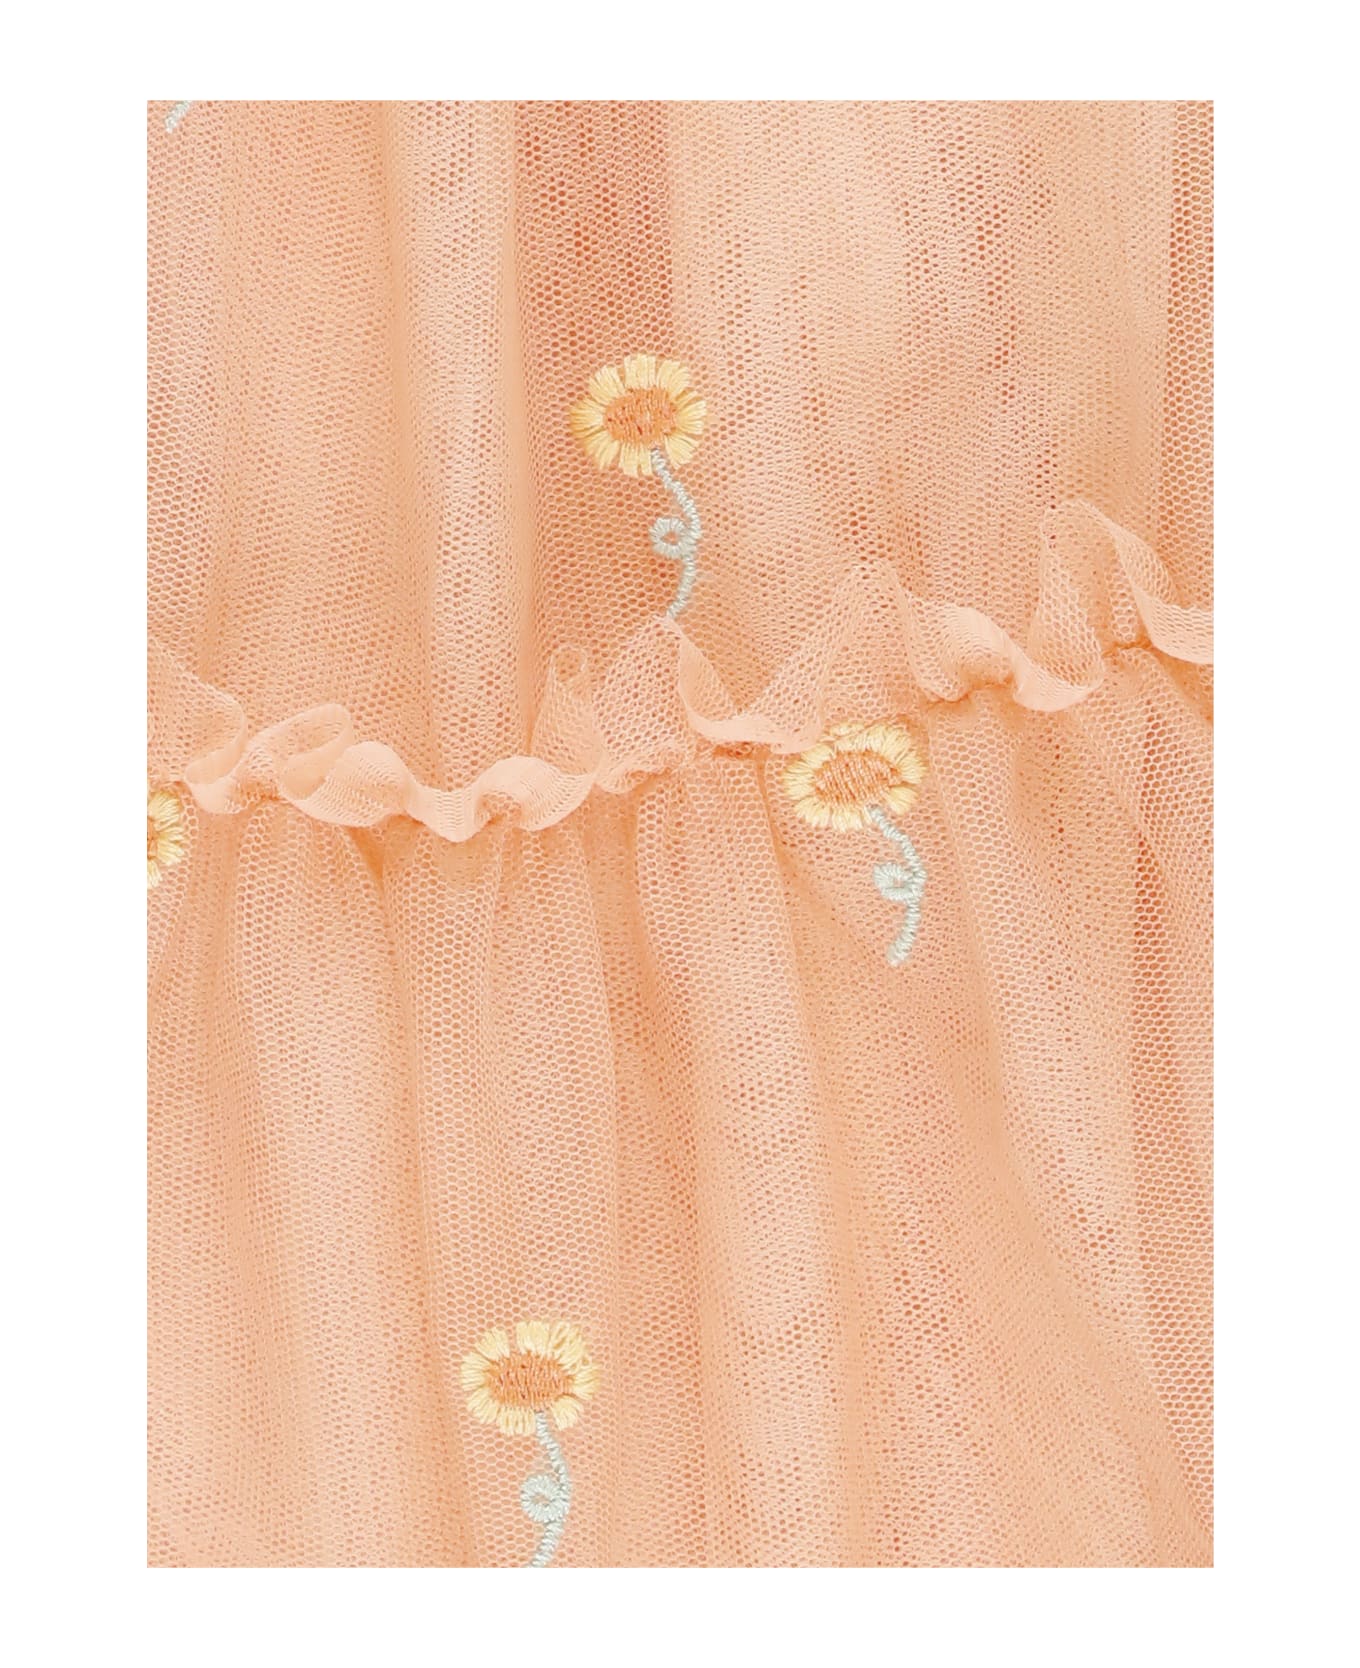 Stella McCartney Sunflower Embroidery Skirt - Pink ボトムス